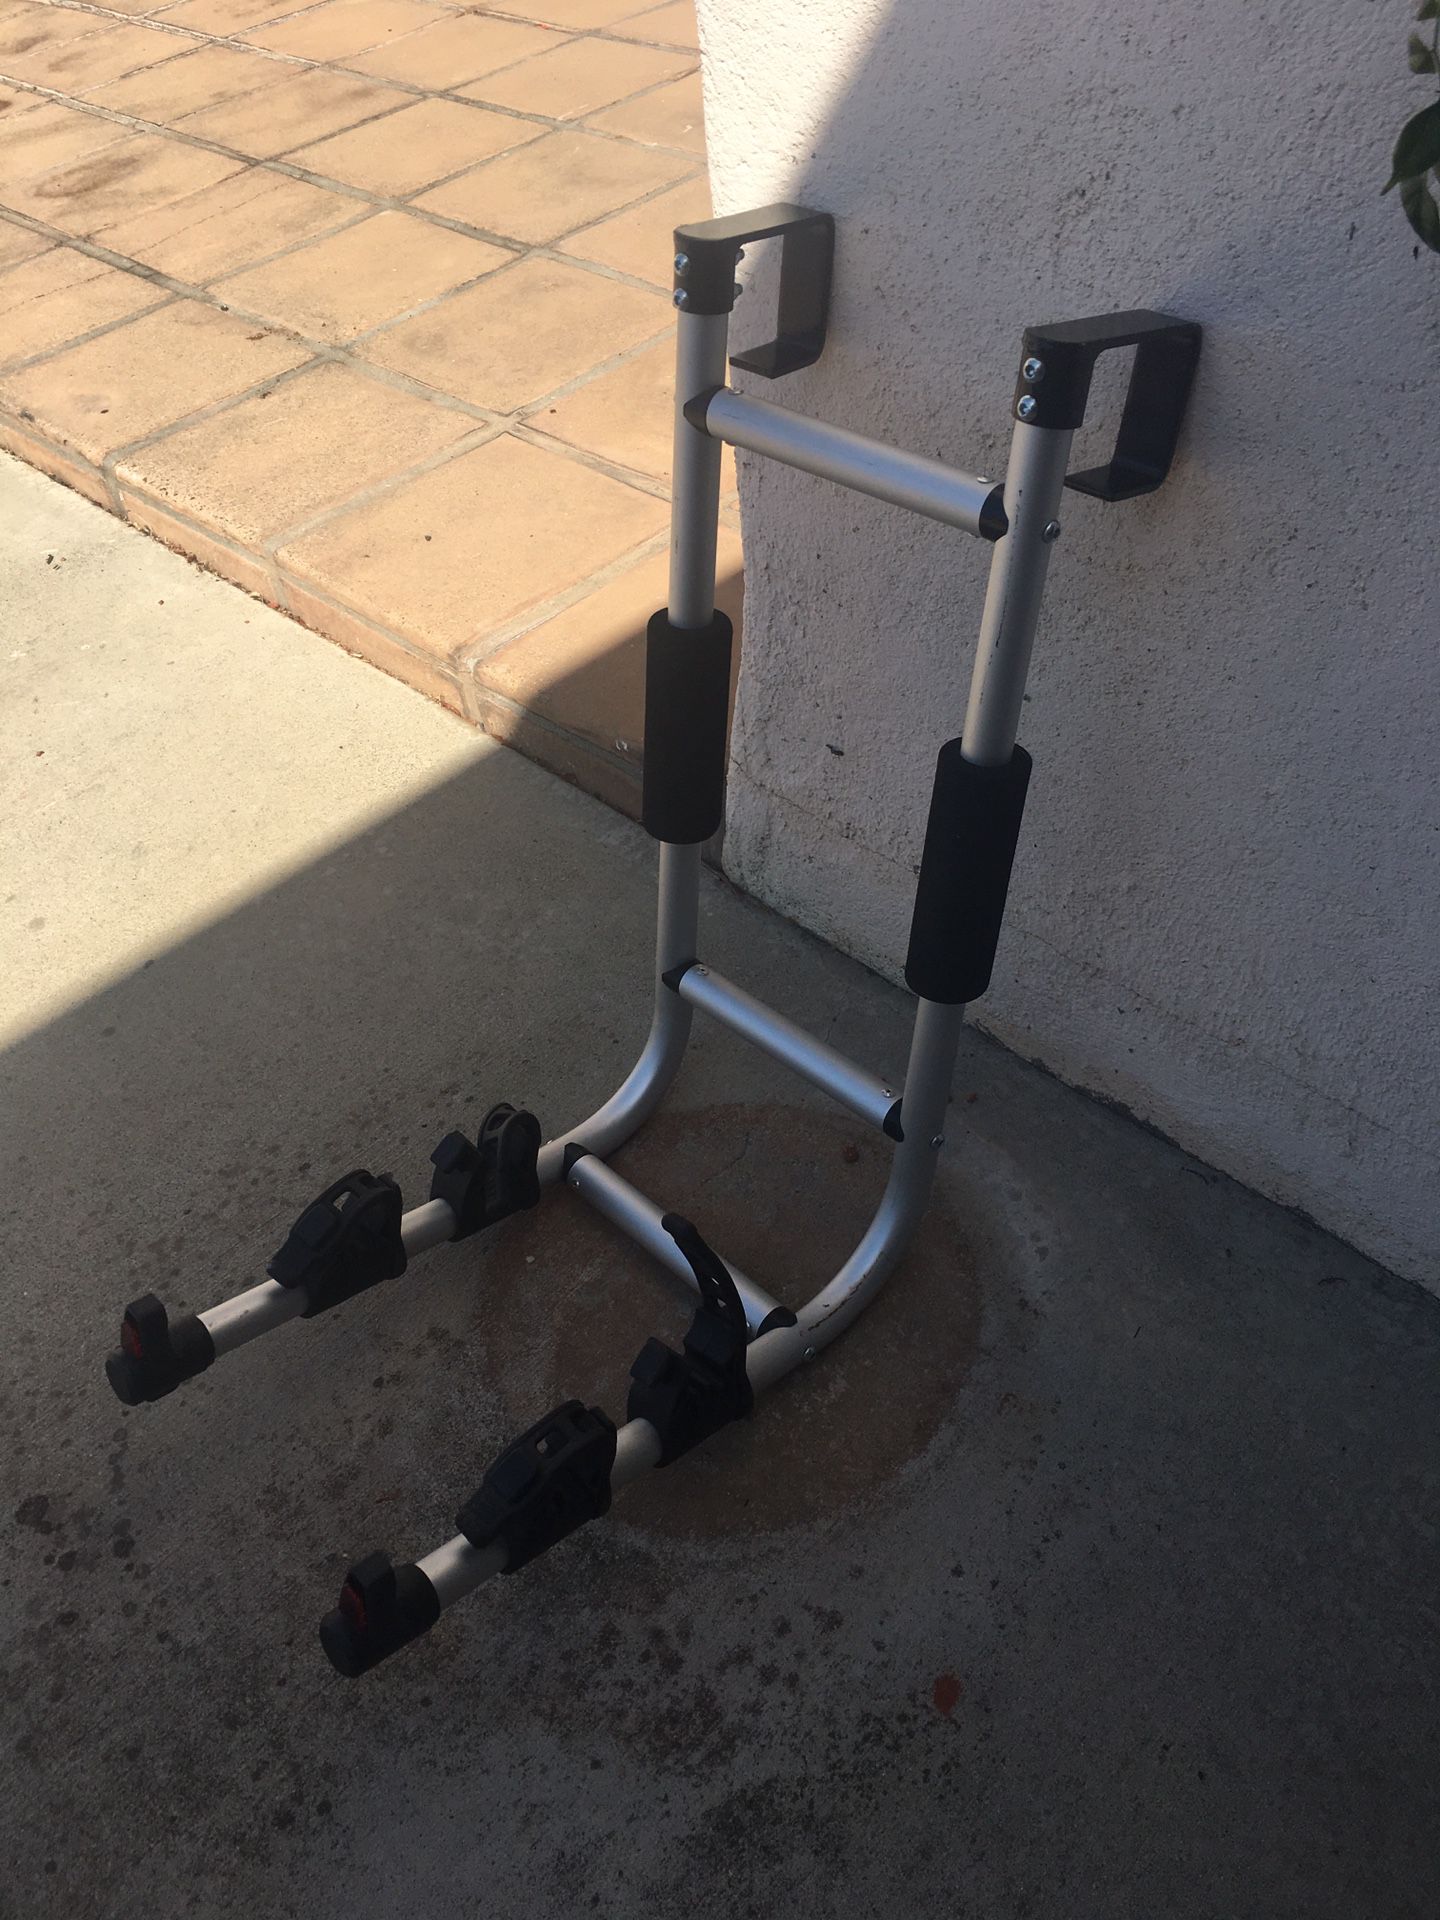 Cycle holder / rack for RV ladder.